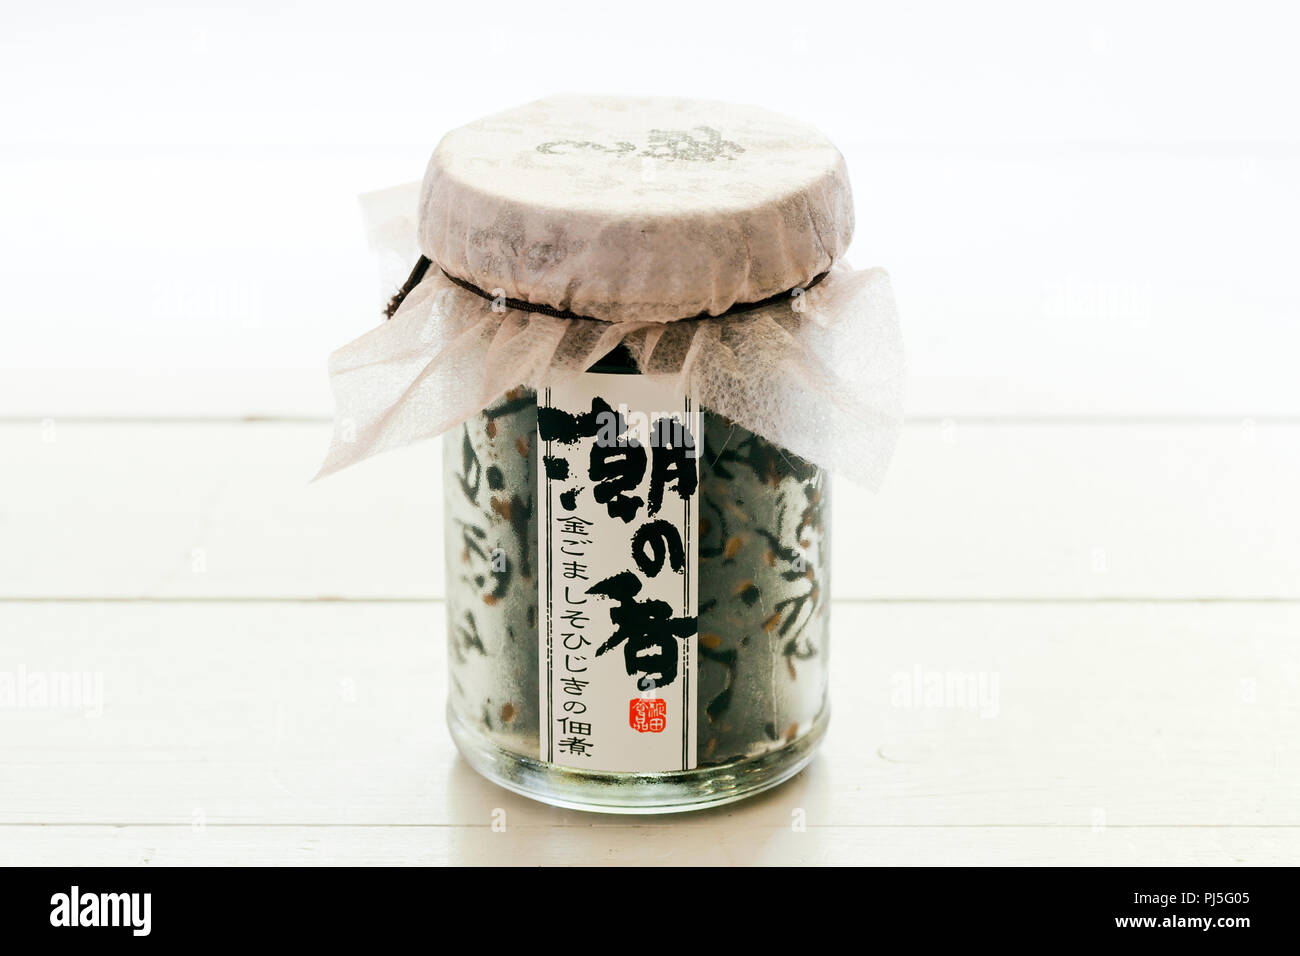 Shio no ka tsukudani (flavored nori seaweed) in bottle - Japanese seaweed. Stock Photo